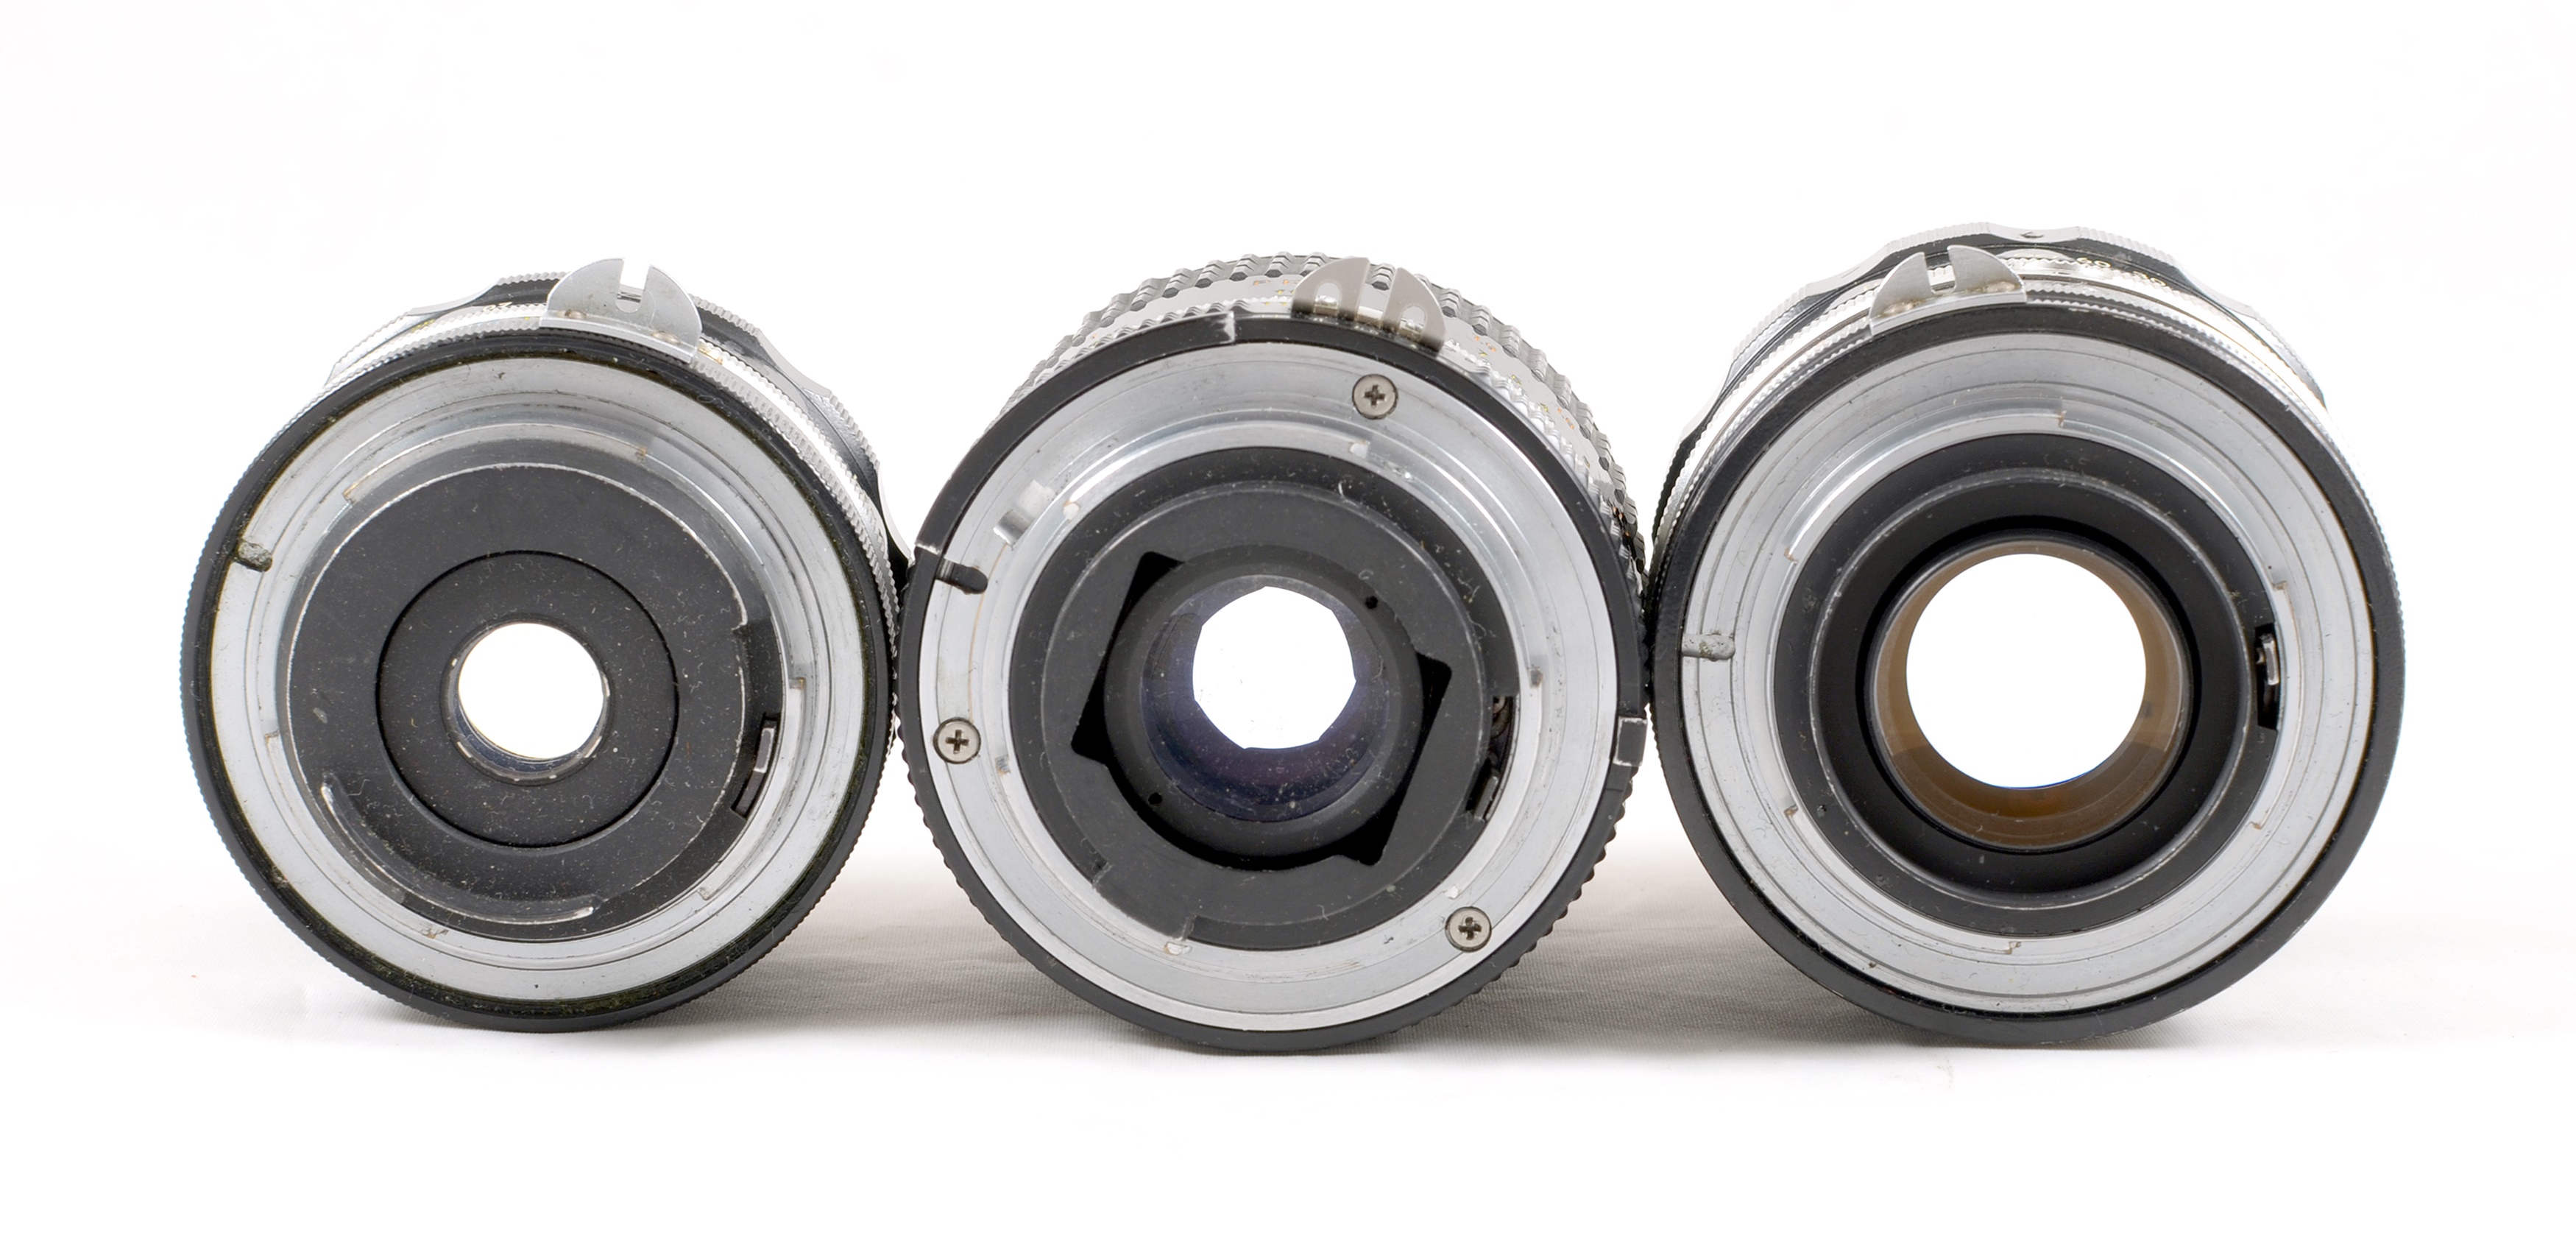 Group of Three Nikon Manual Focus Prime Lenses. - Image 3 of 3